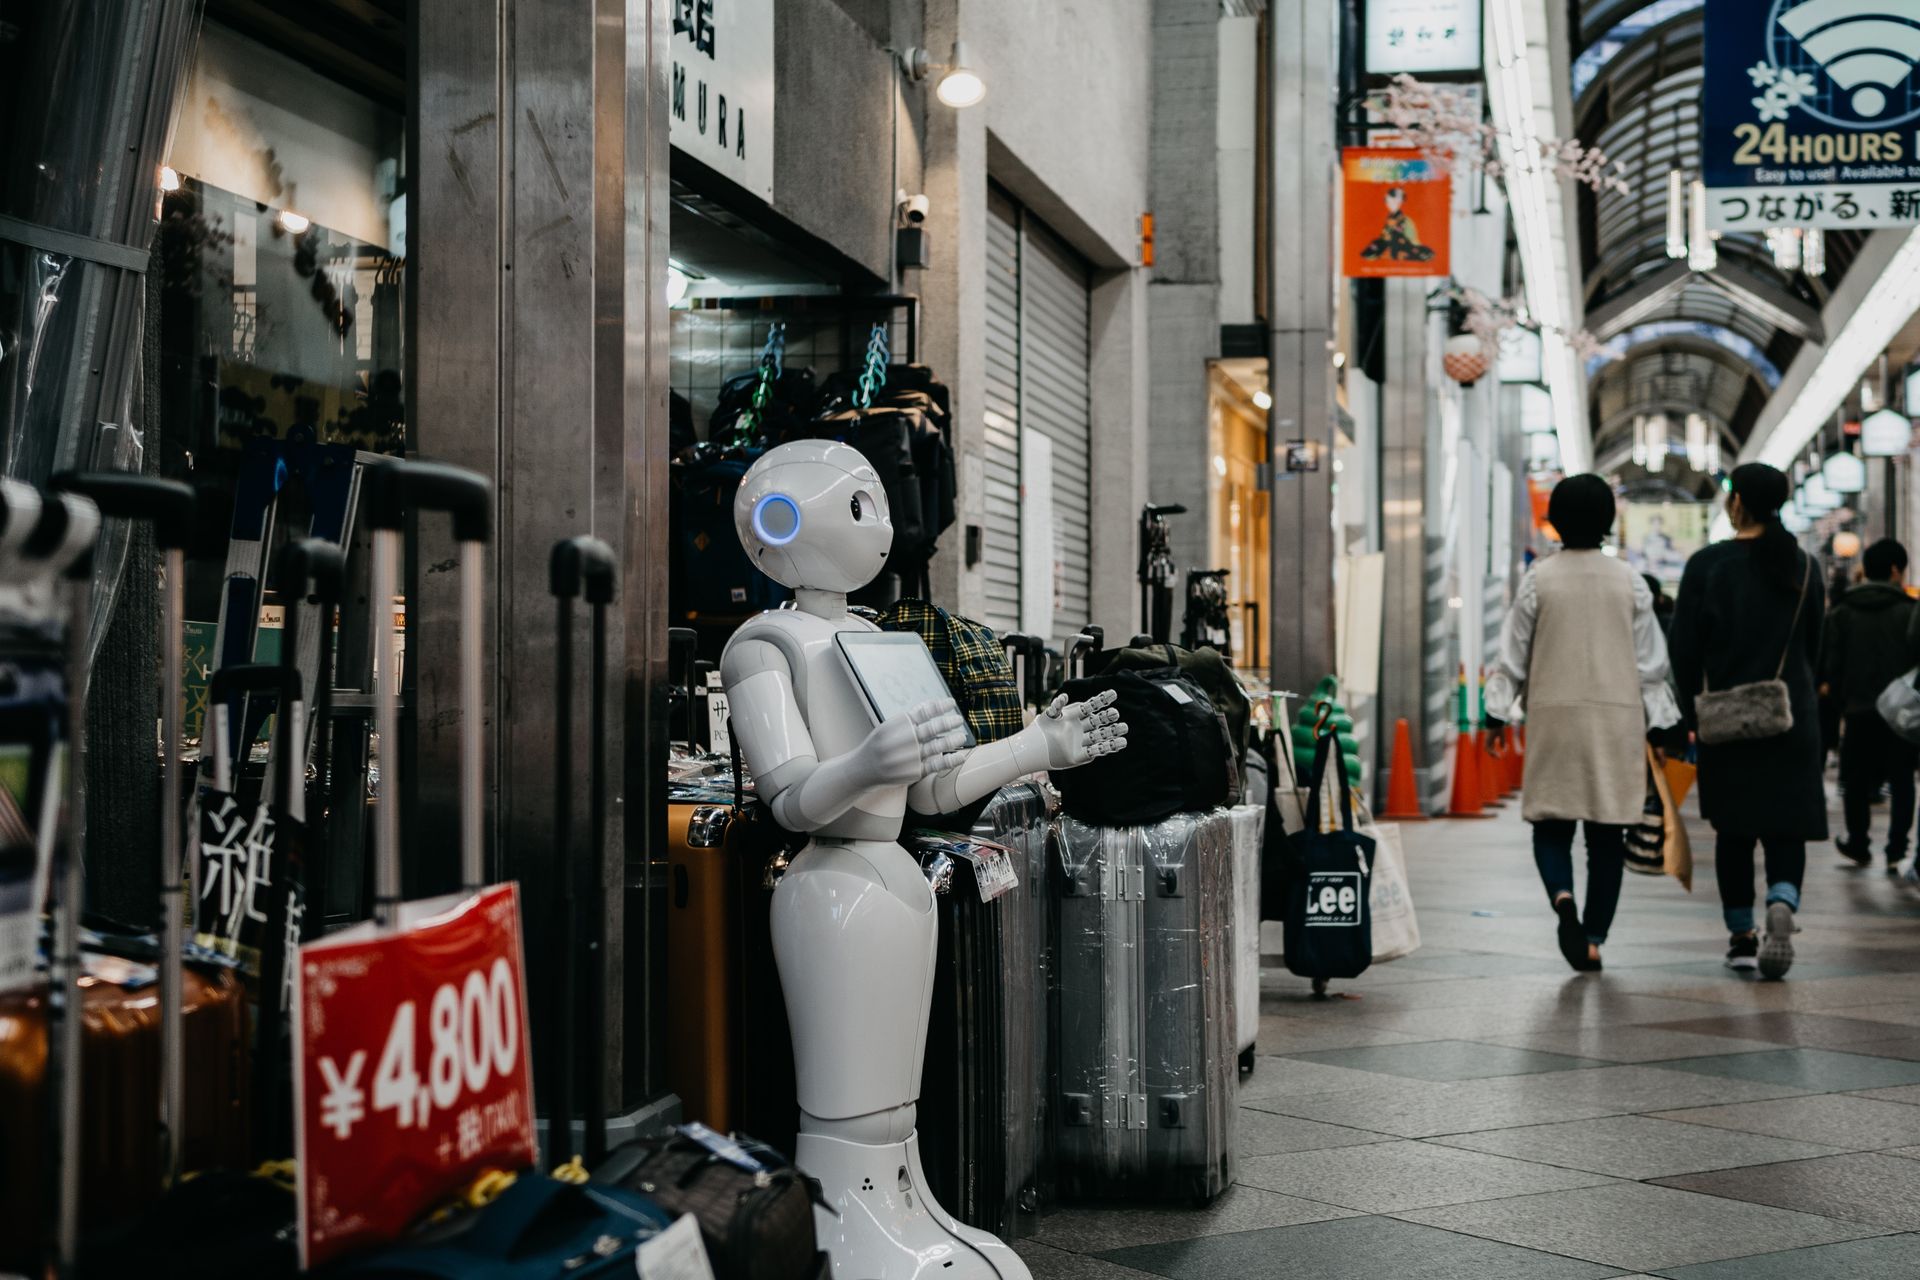 AI will affect 40 percent of jobs